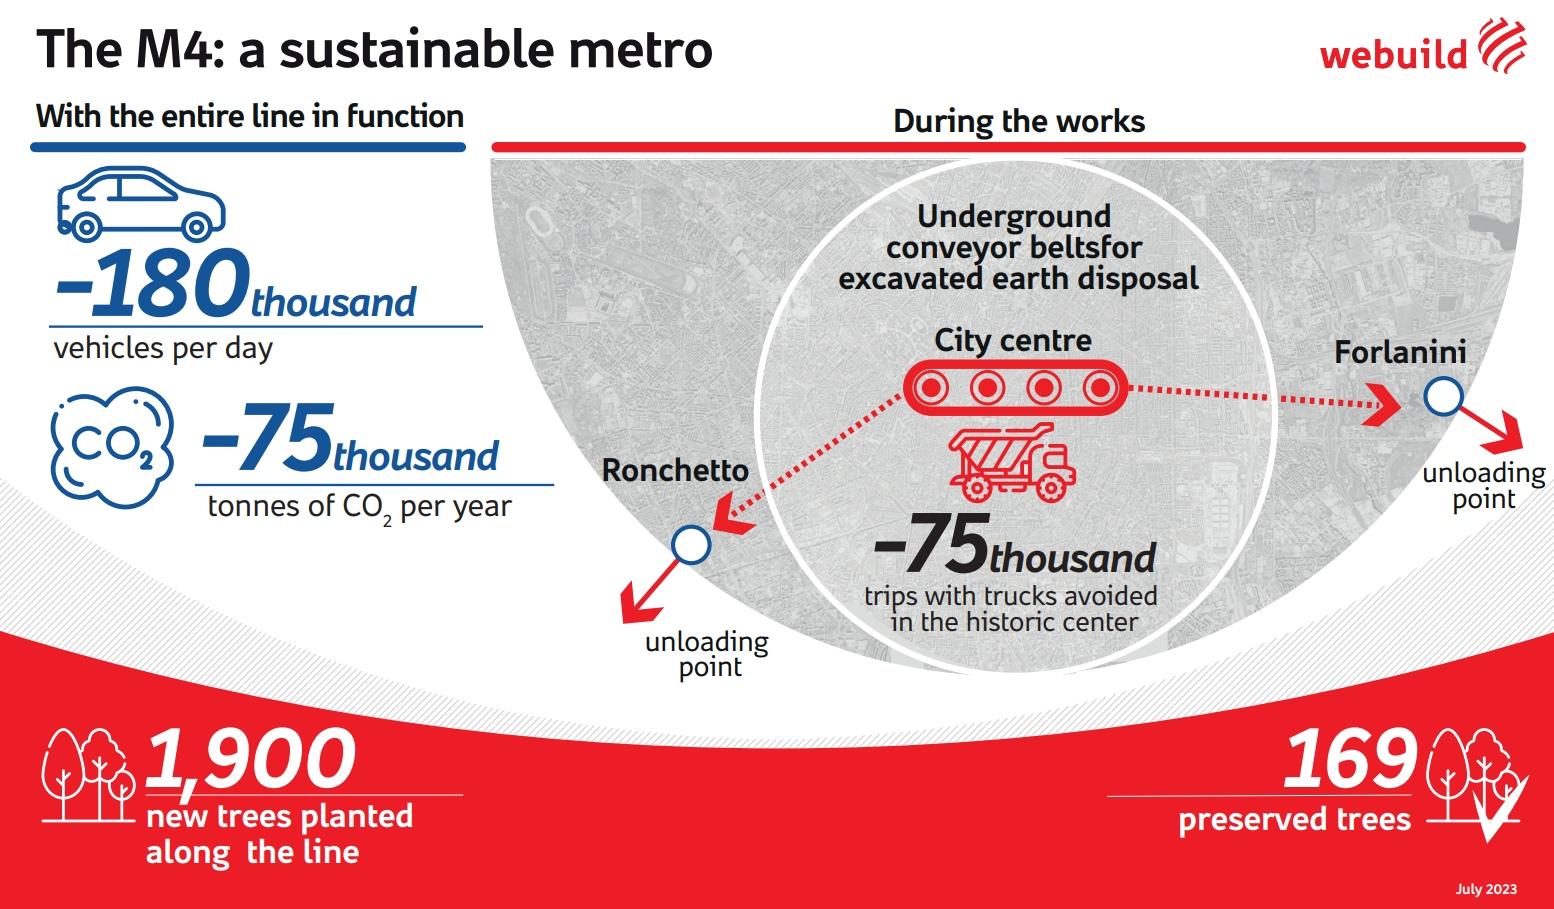 M4 Milan Metro, sustainability infographic - Webuild